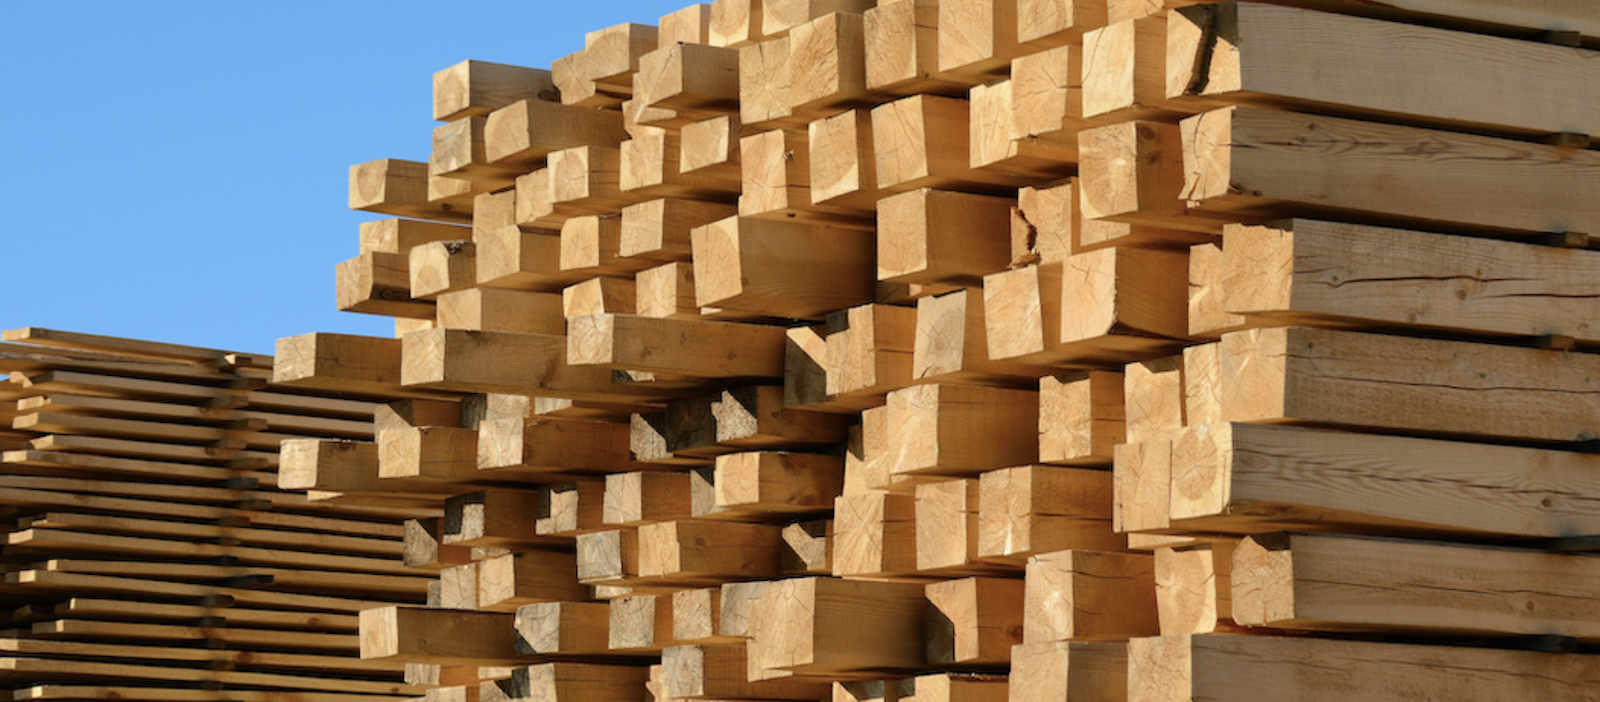  Stack of lumber in lumberyard